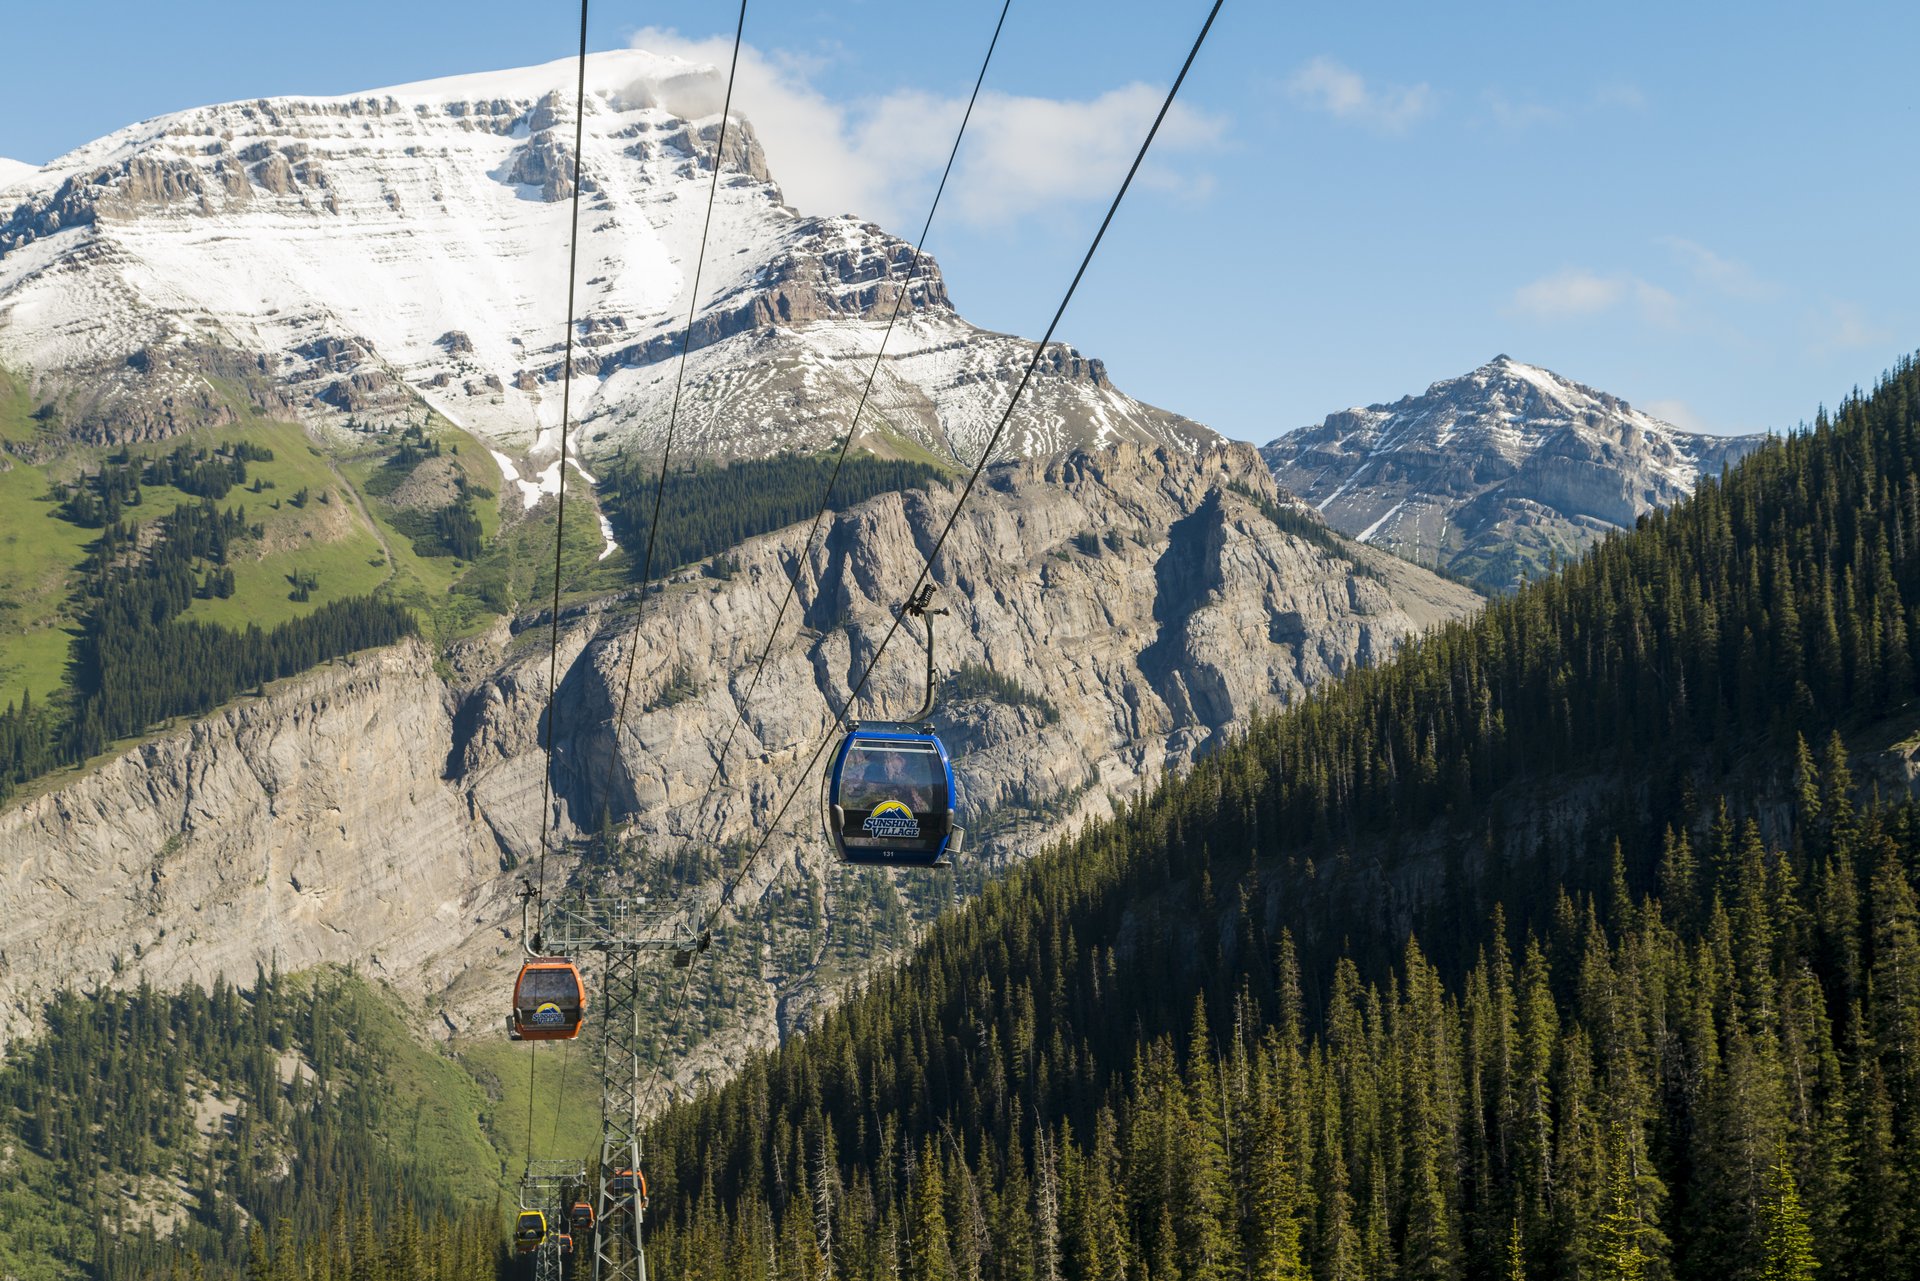 Sunshine Village Gondola Banff - View of Mount Borgeau